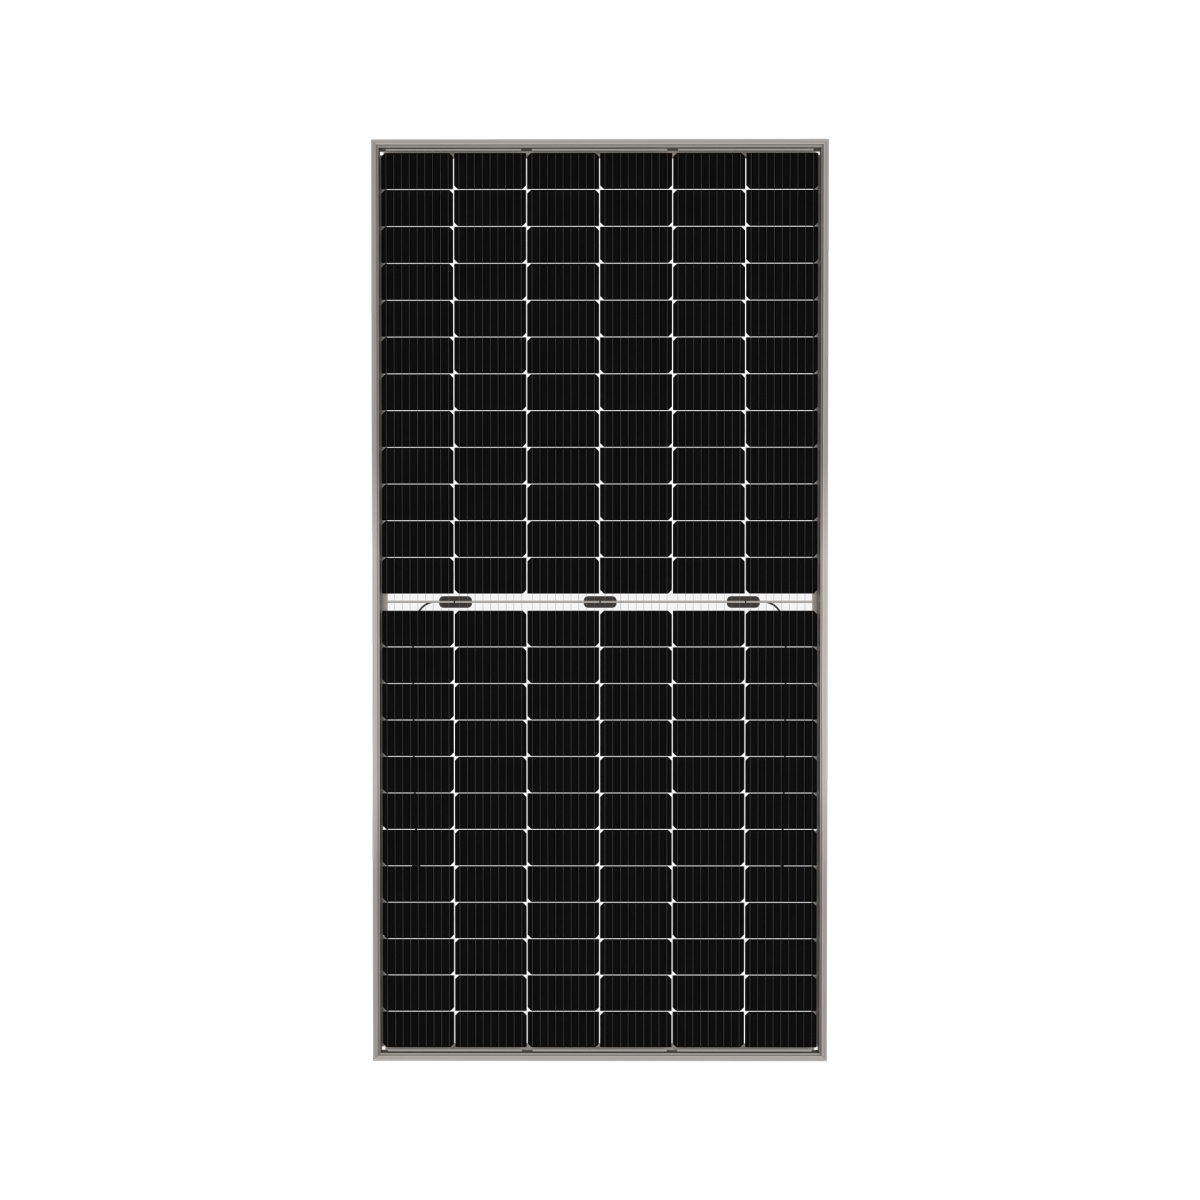 TommaTech 465 Watt 144 Percmono Bifacial Half-Cut Multi Busbar Solar Panel